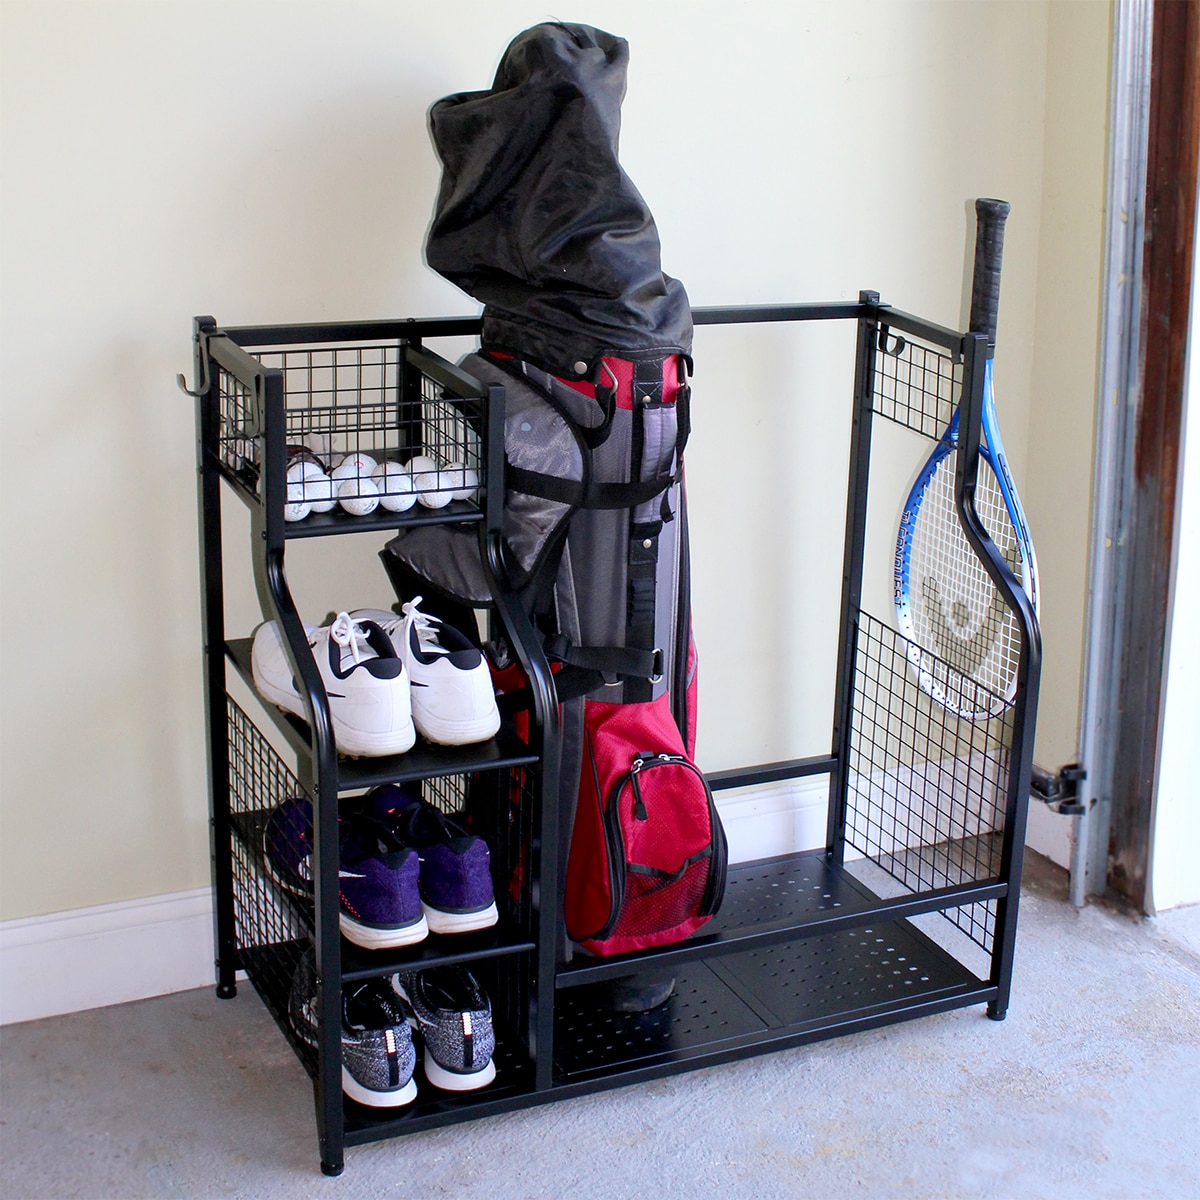 Mythinglogic Golf Storage Garage Organizer, Golf Bag Storage Stand